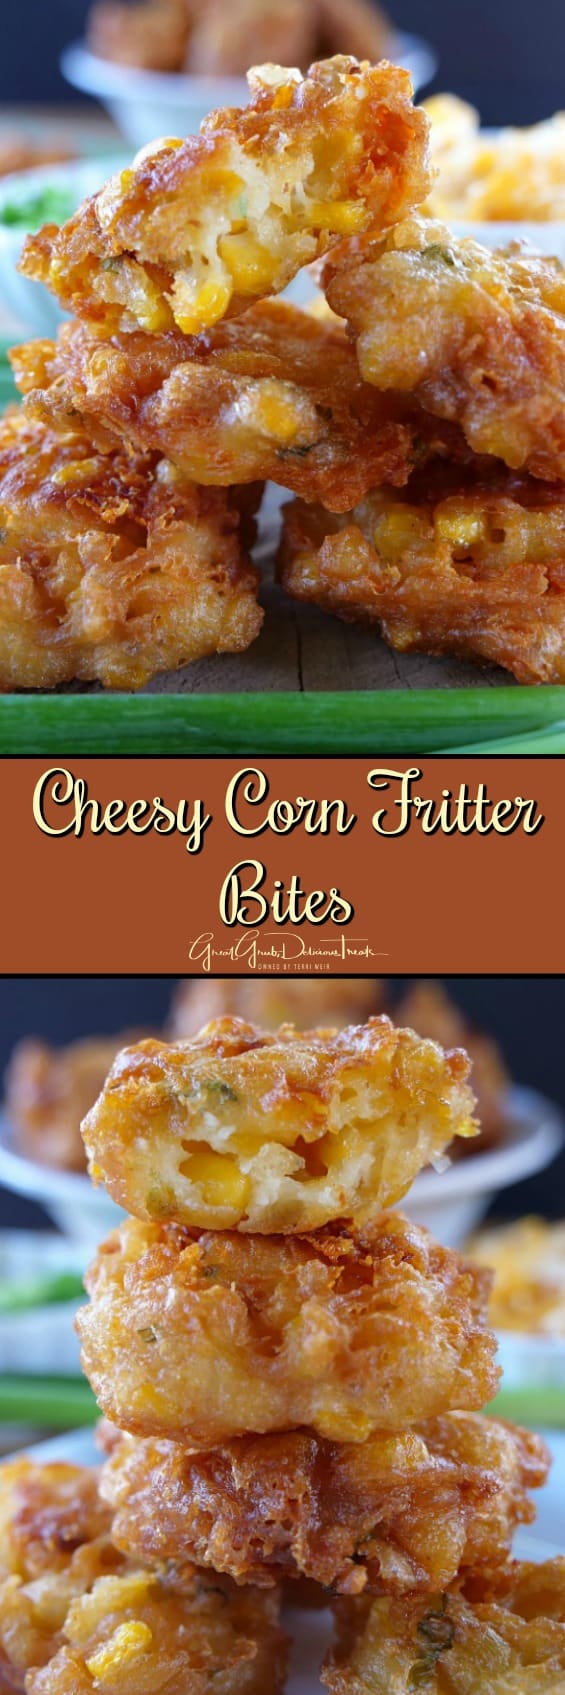 Cheesy Corn Fritter Bites